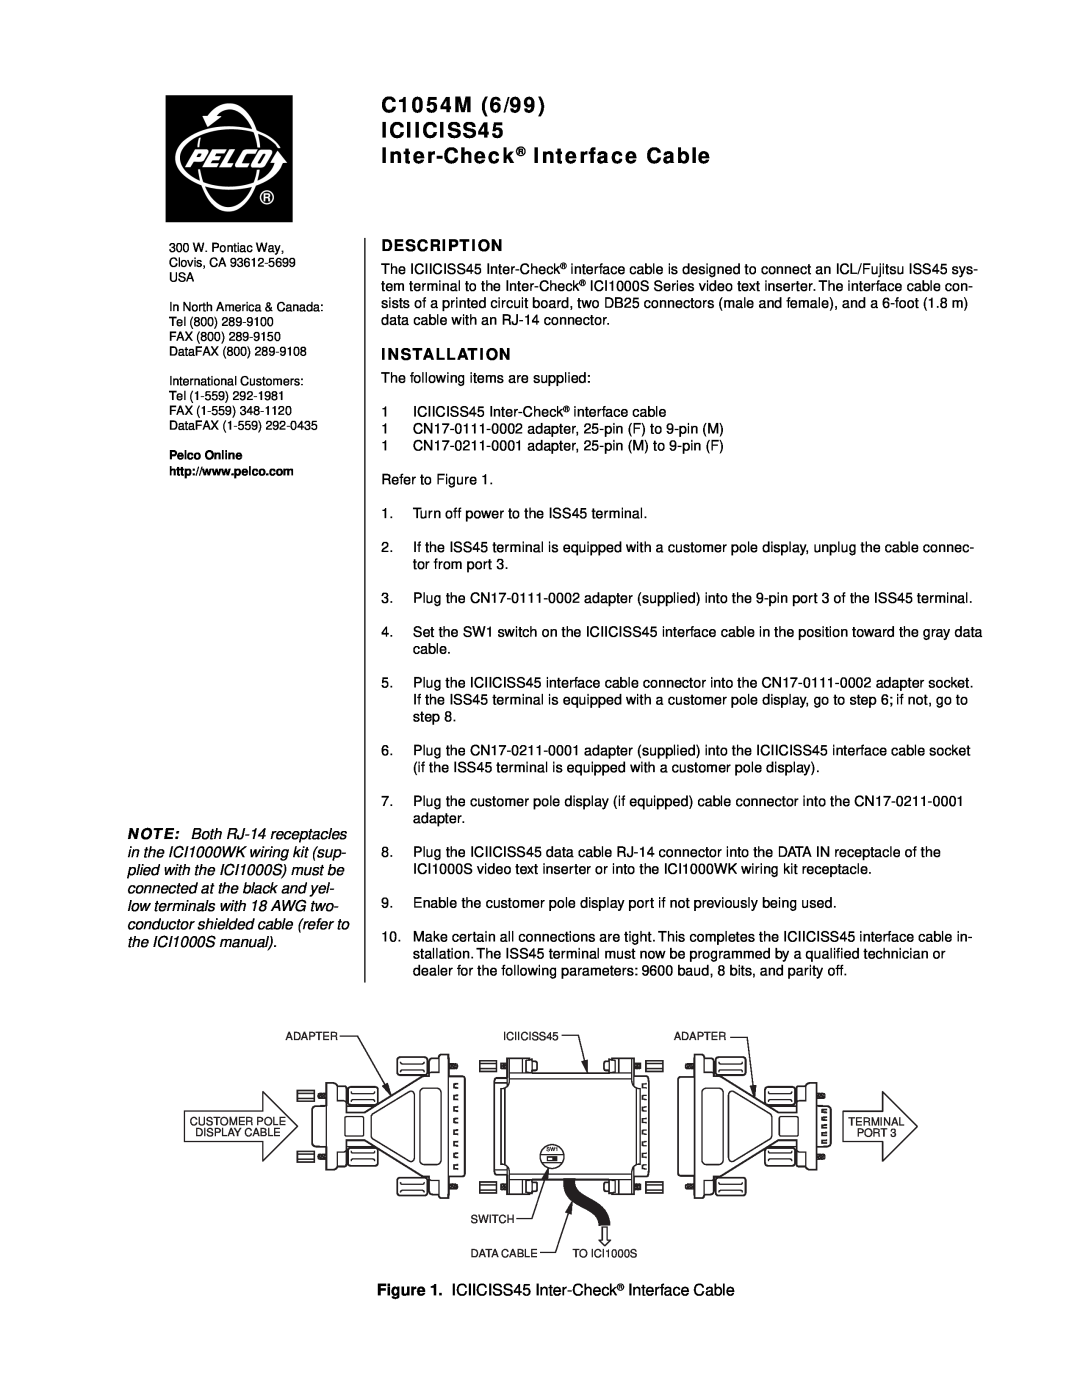 Pelco manual Description, Installation, C1054M 6/99 ICIICISS45, Inter-Check Interface Cable 